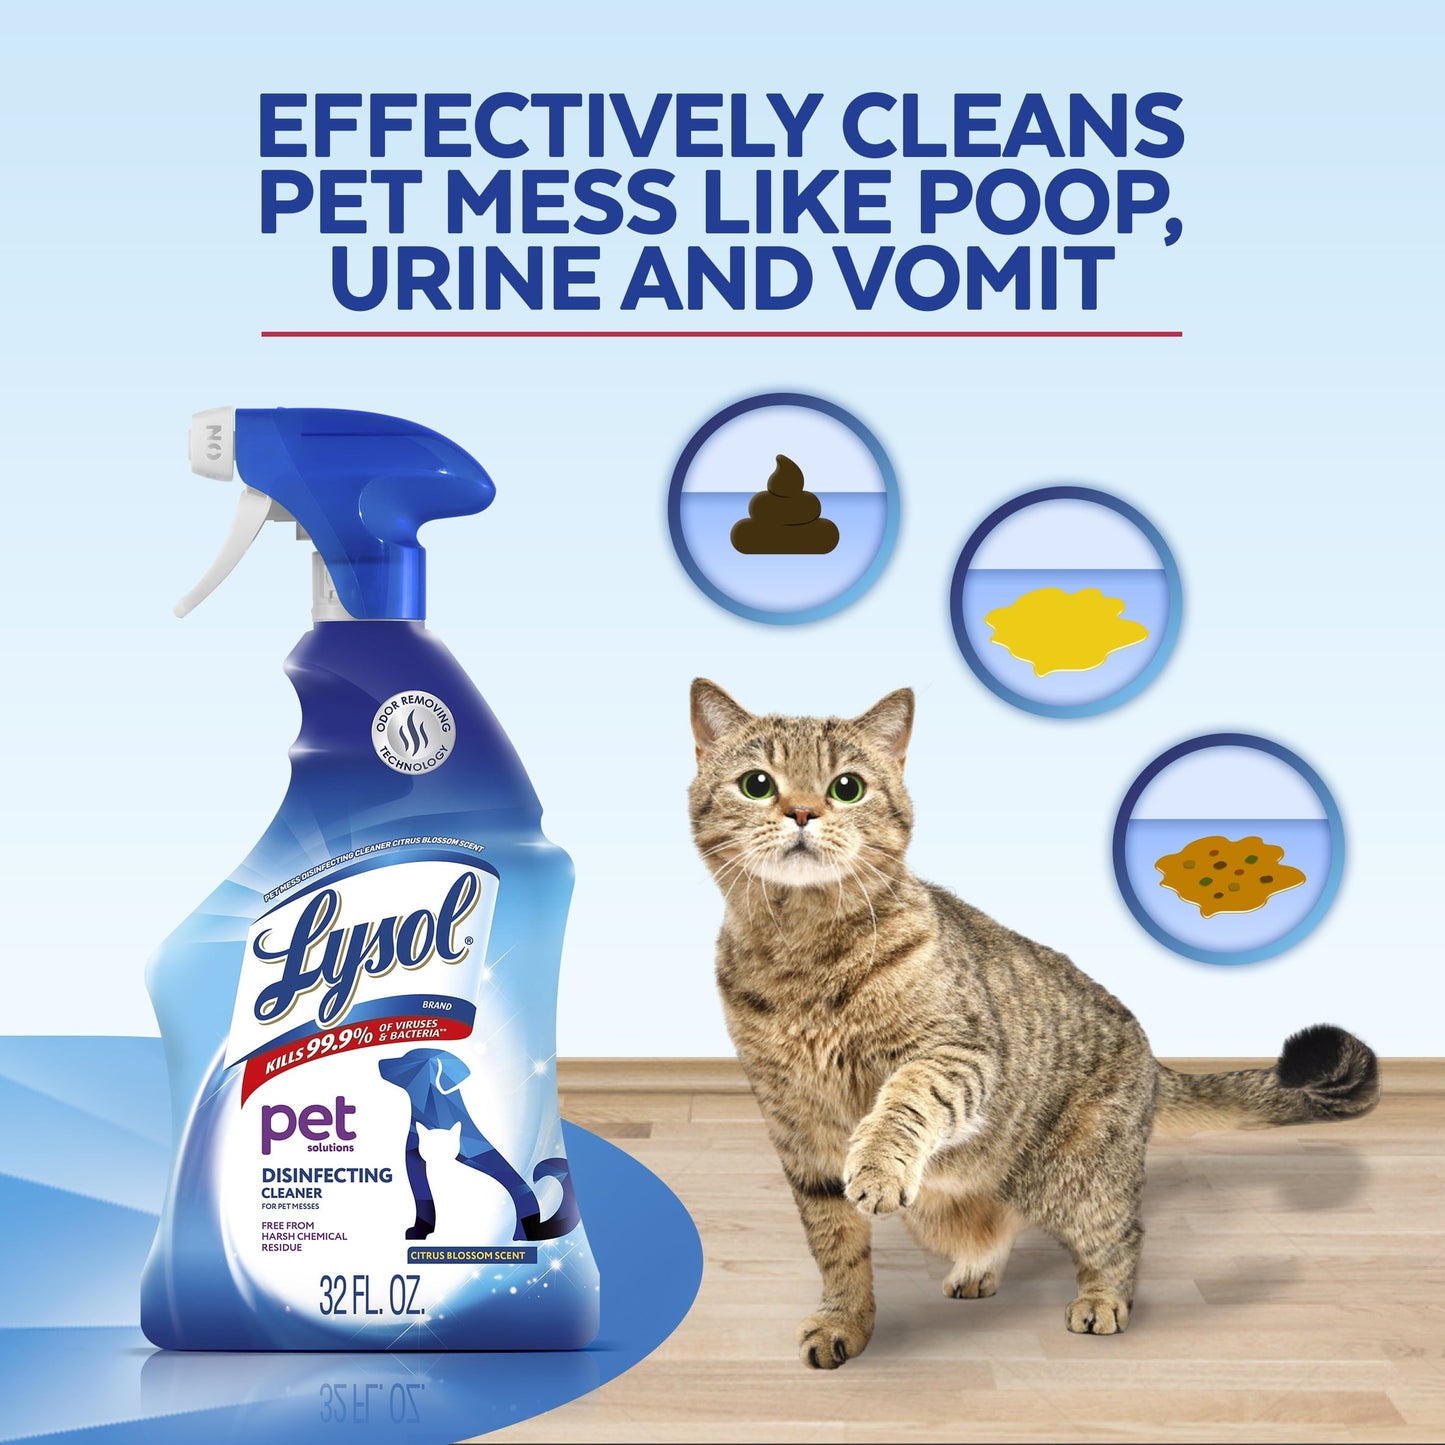 Lysol Pet Solutions –Disinfecting Cleaner, Citrus Blossom Scent, 32 FL OZ.